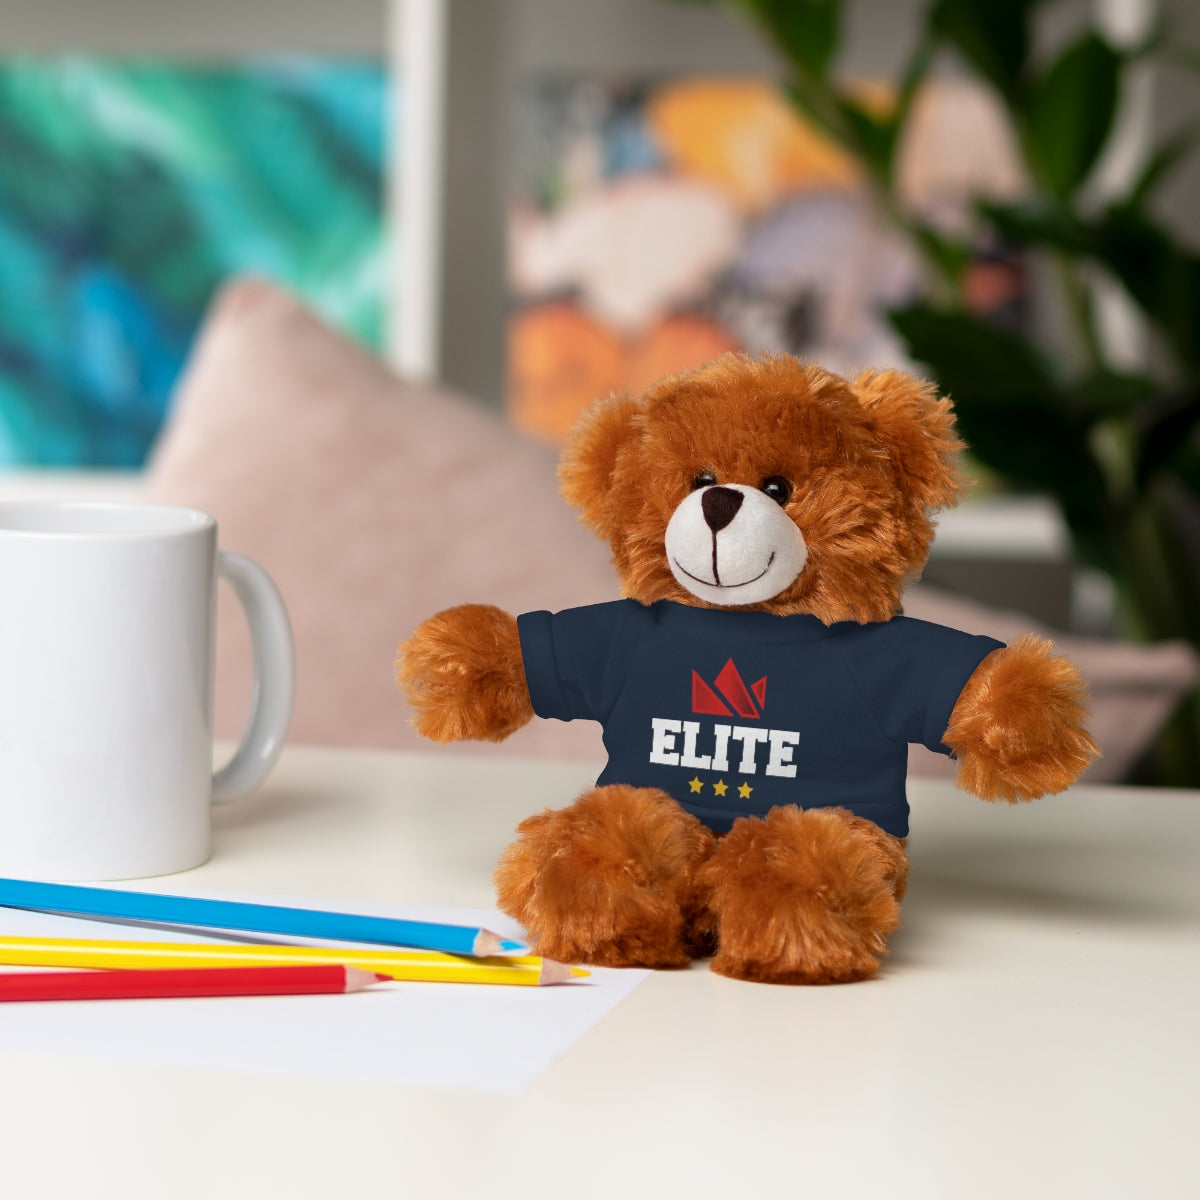 EliteTeam.Tv Stuffed Animals with Tee